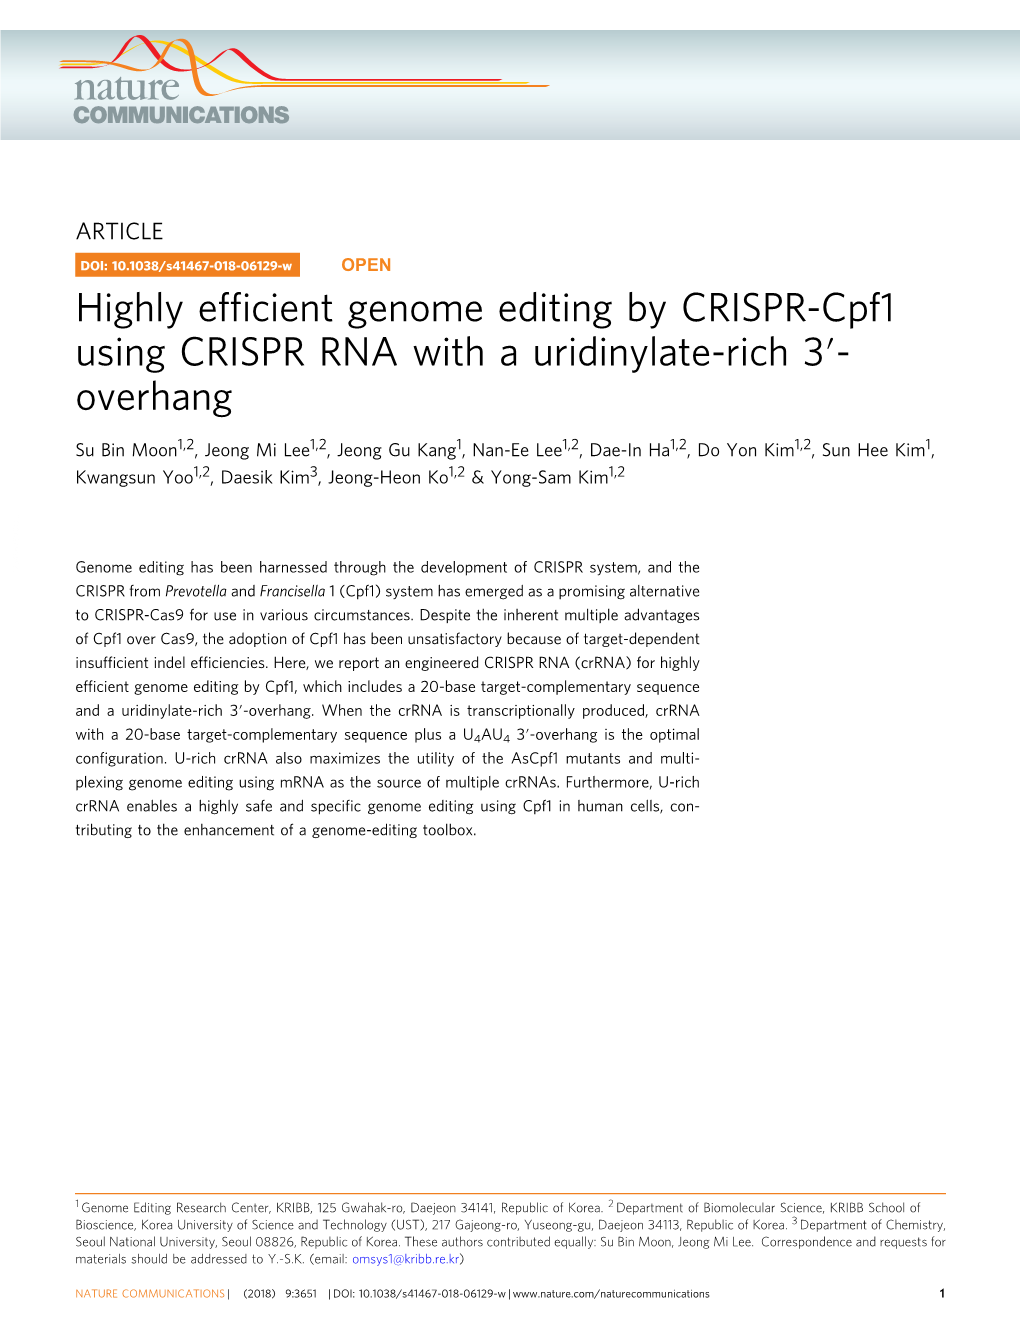 Highly Efficient Genome Editing by CRISPR-Cpf1 Using CRISPR RNA